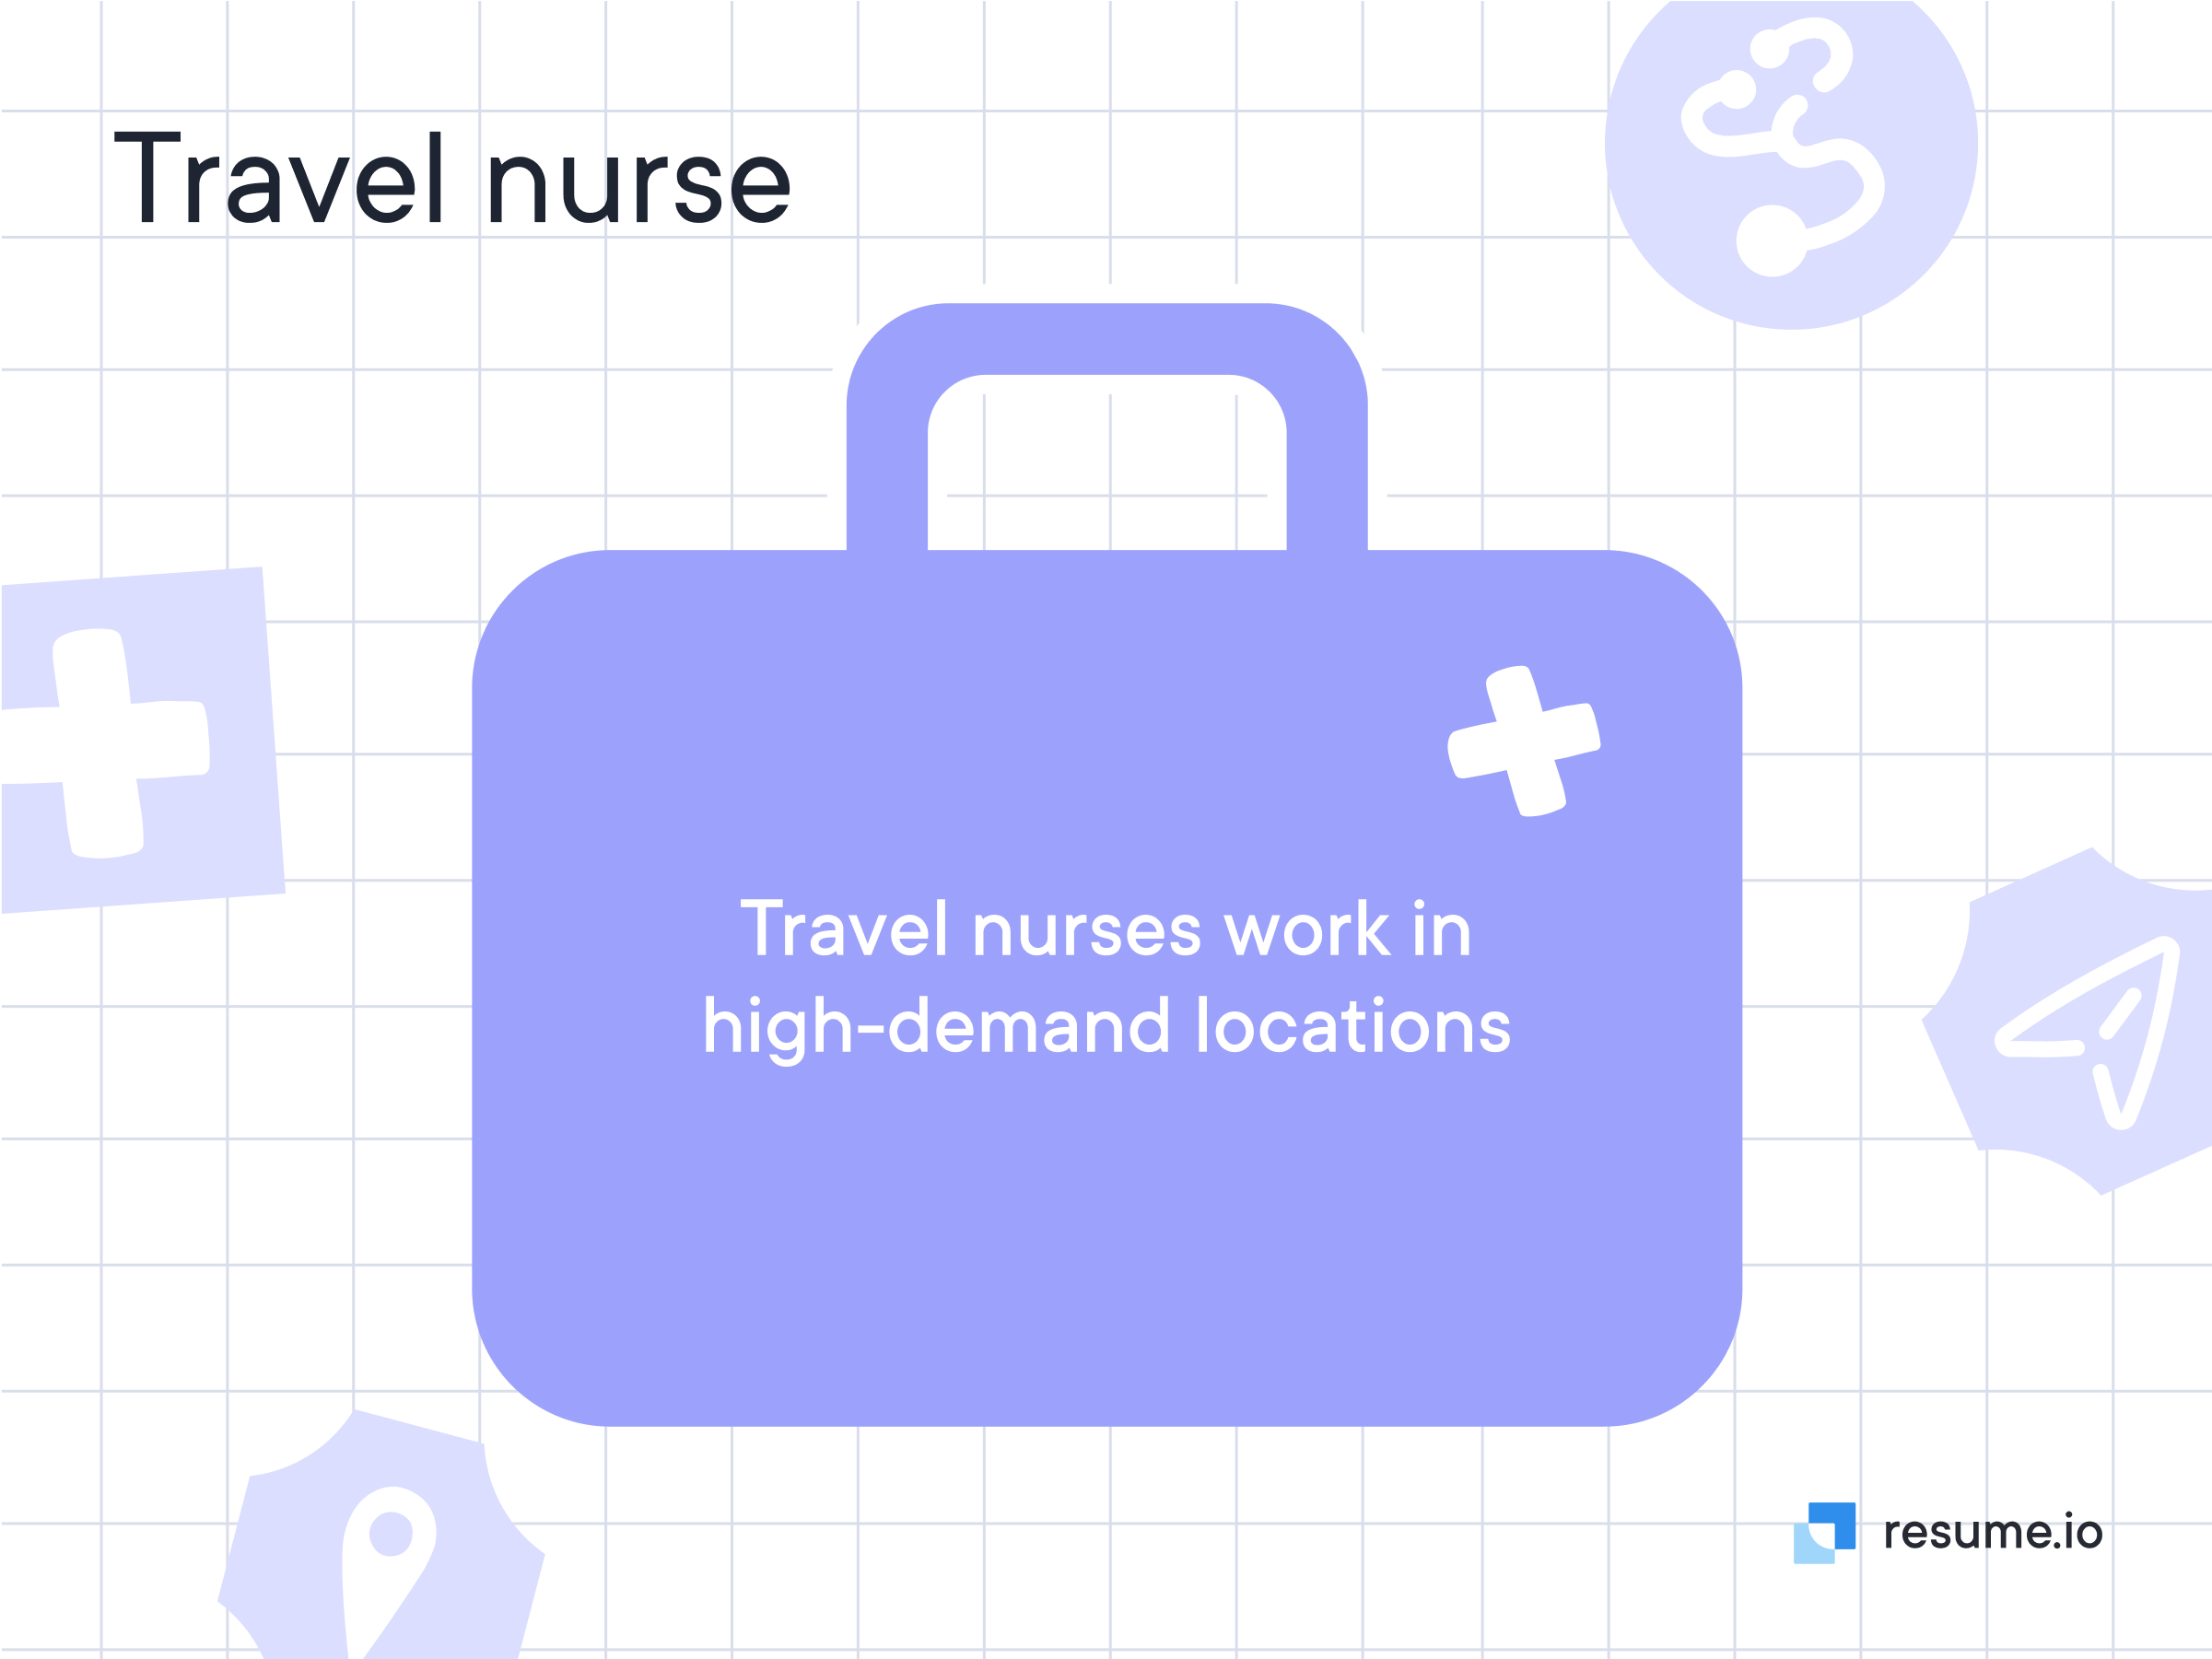 Travel nurses work in high-demand locations